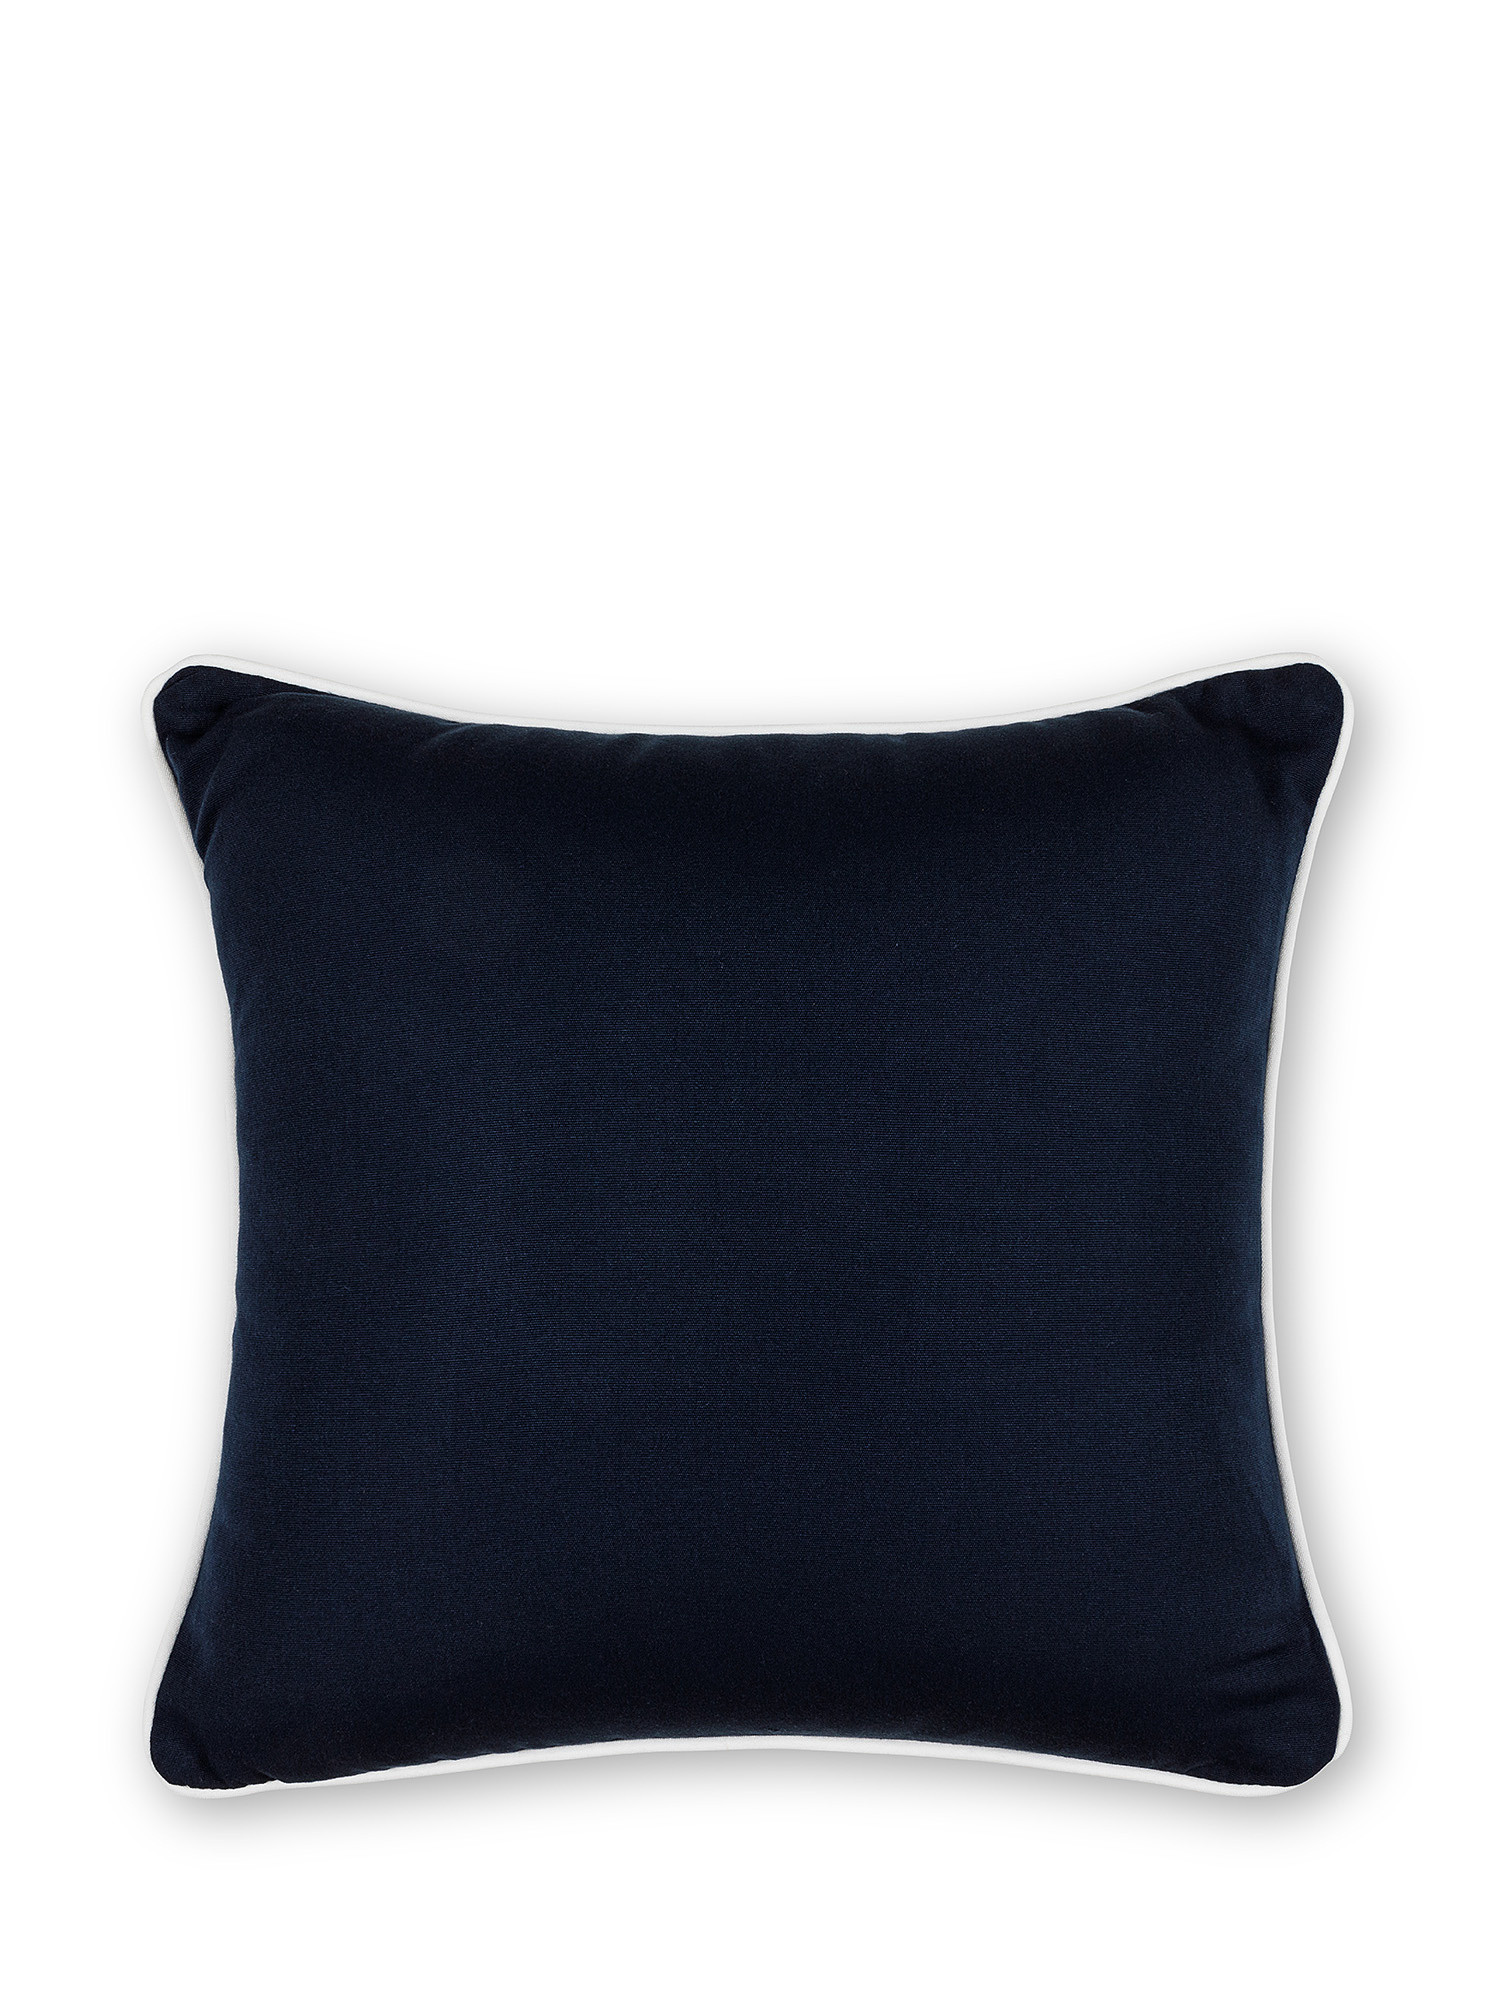 Cuscino da esterno in teflon 45x45cm, Blu, large